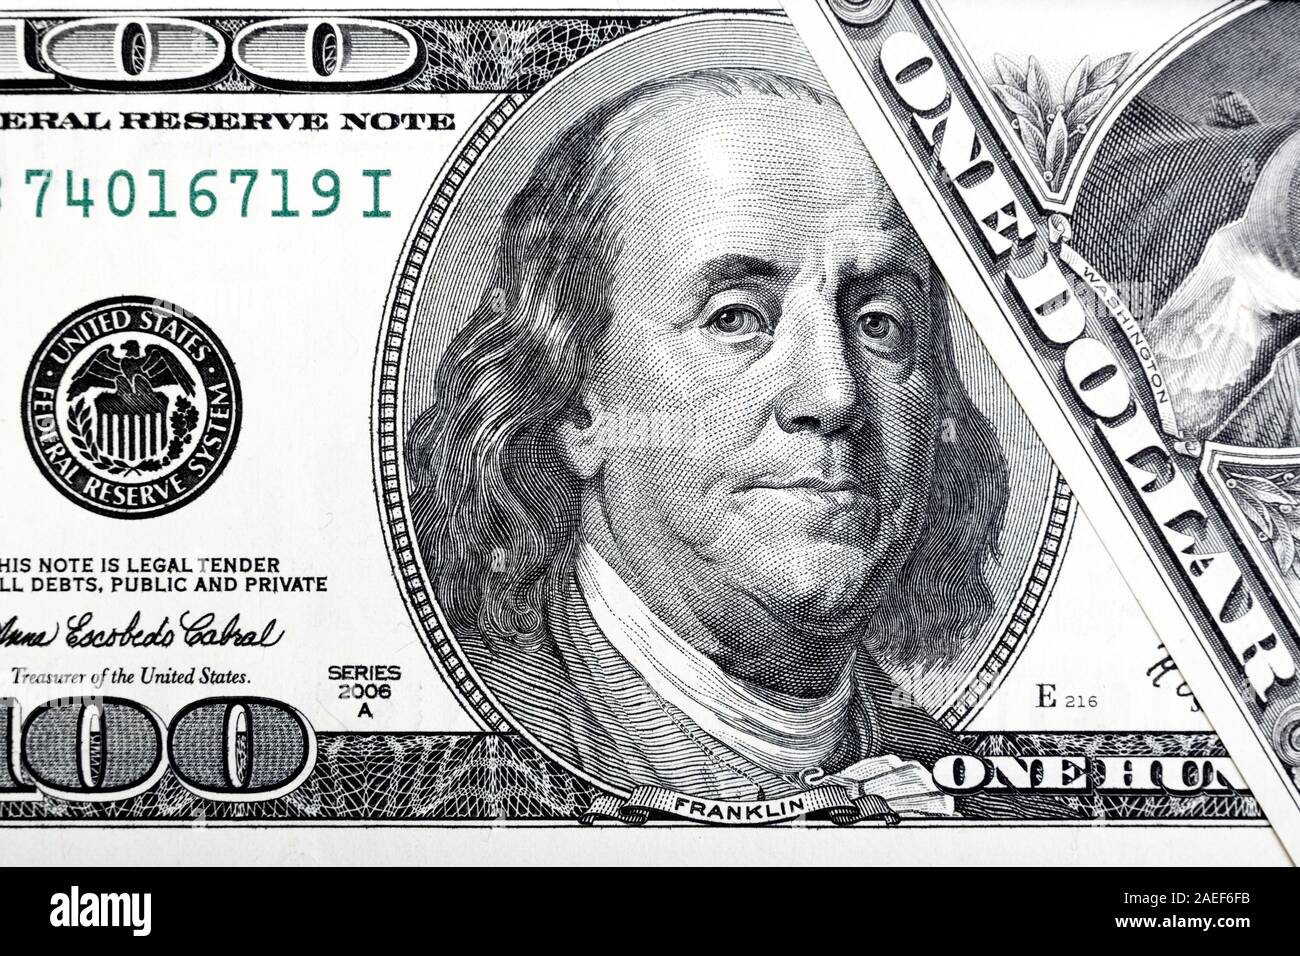 Portrait of Benjamin Franklin from one hundred dollars bill. Stock Photo